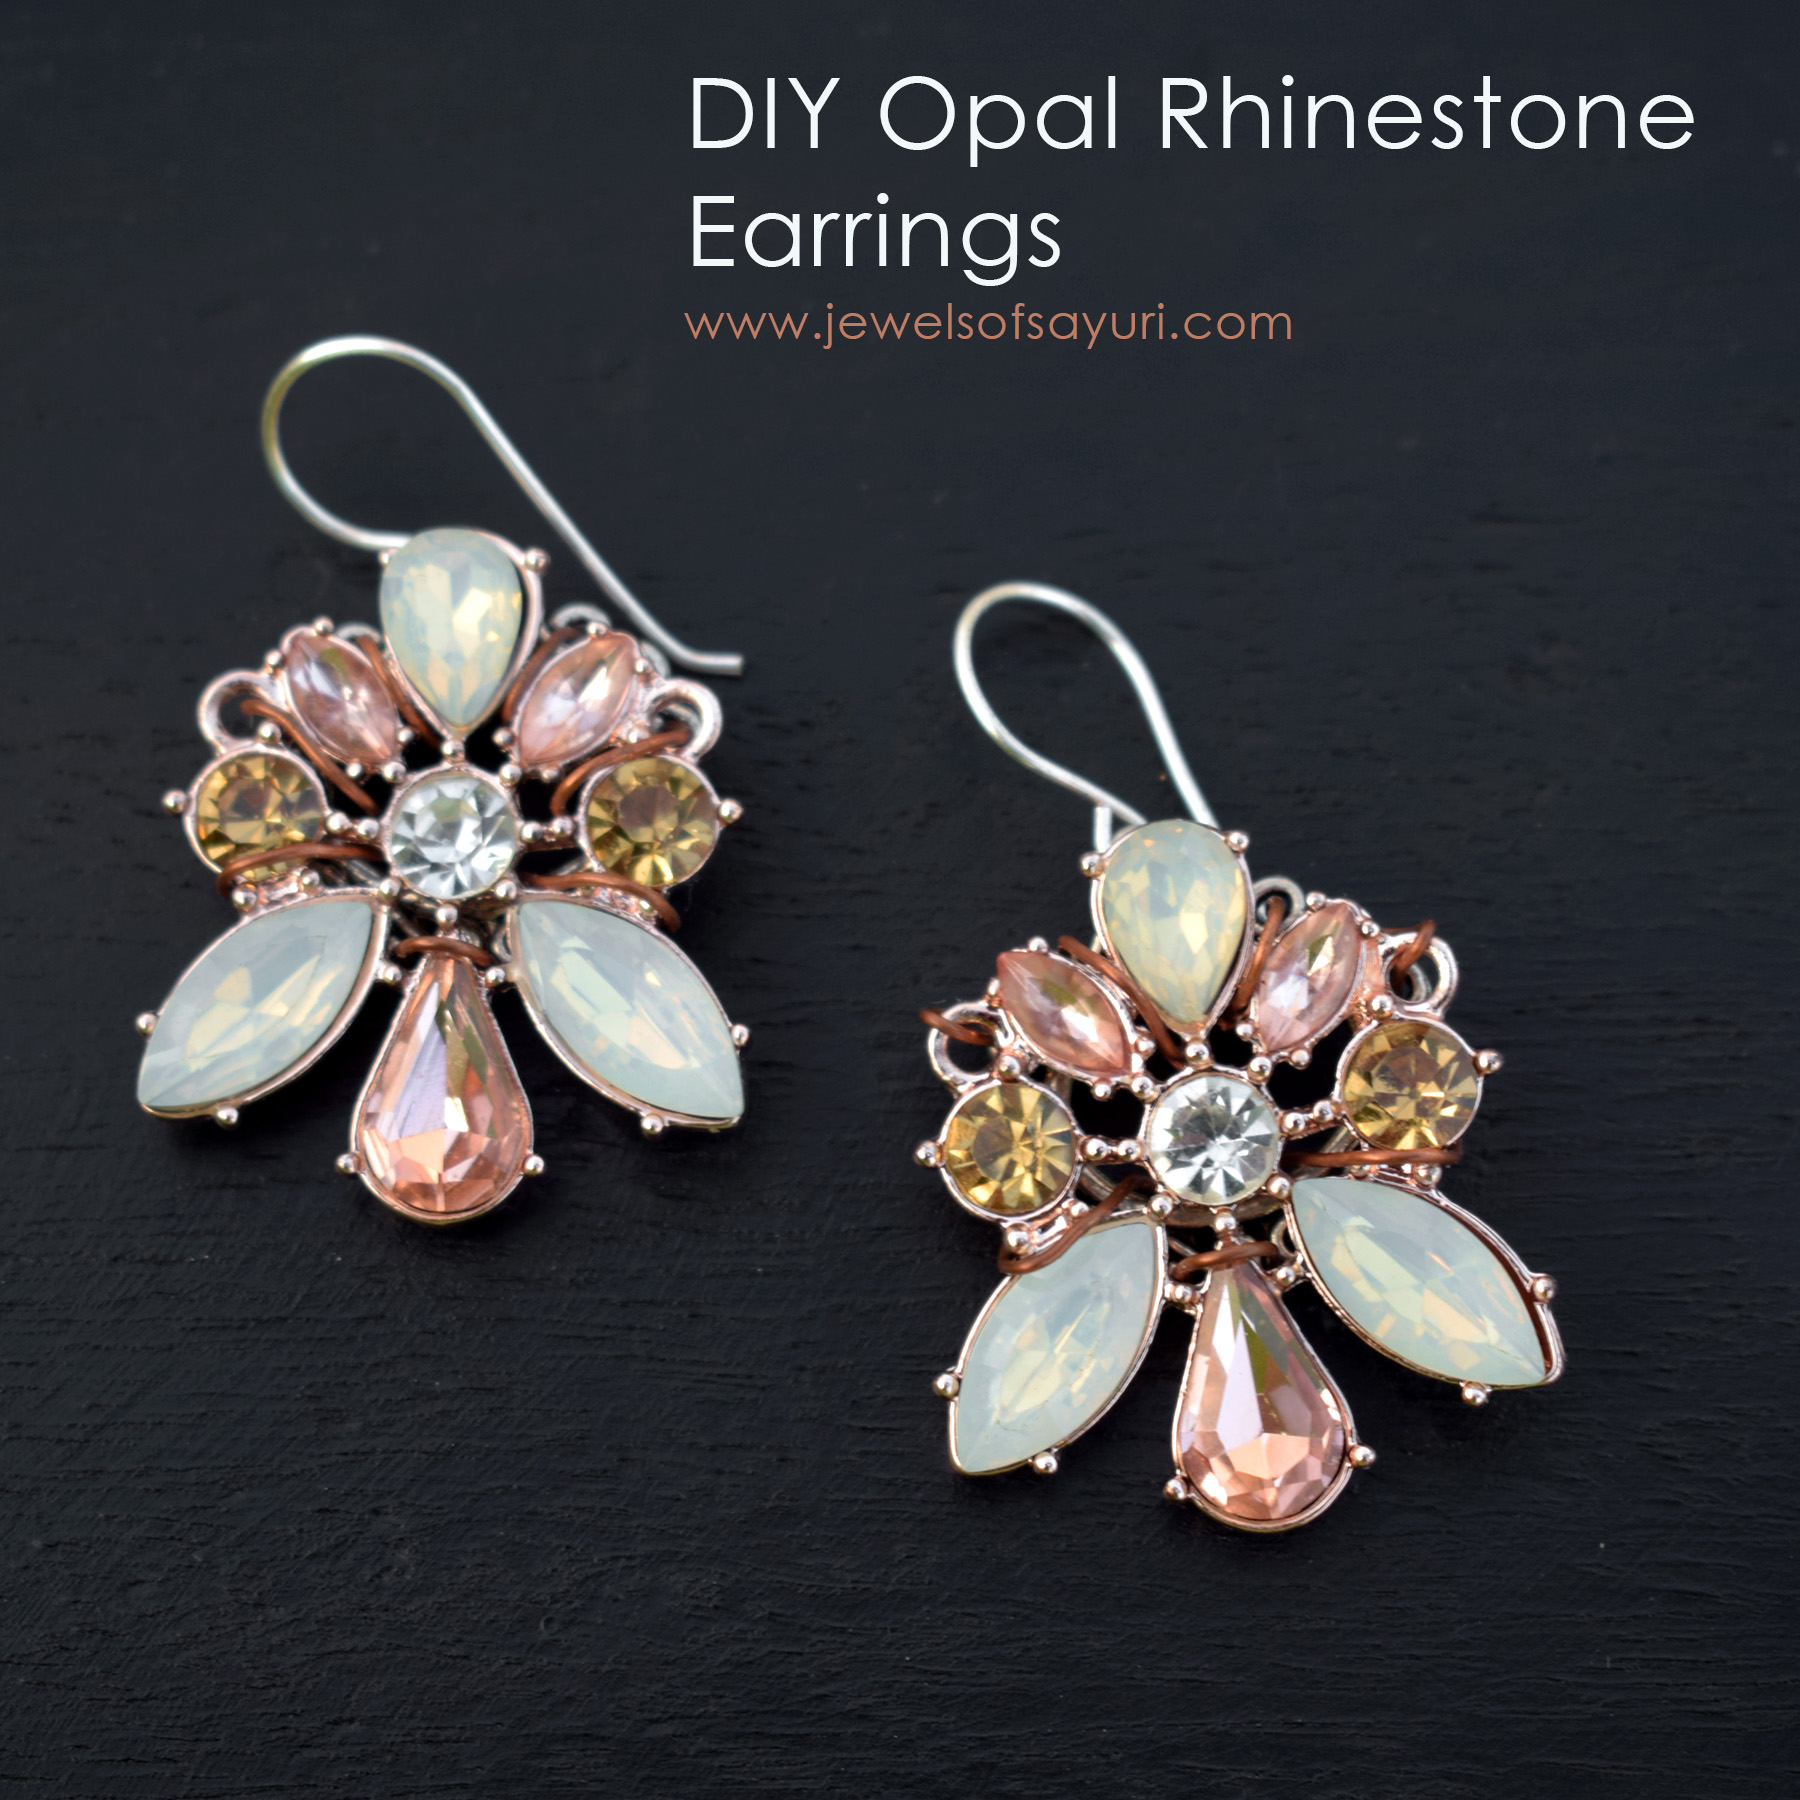 DIY Opal Rhinestone Earrings tutorial by Sayuri